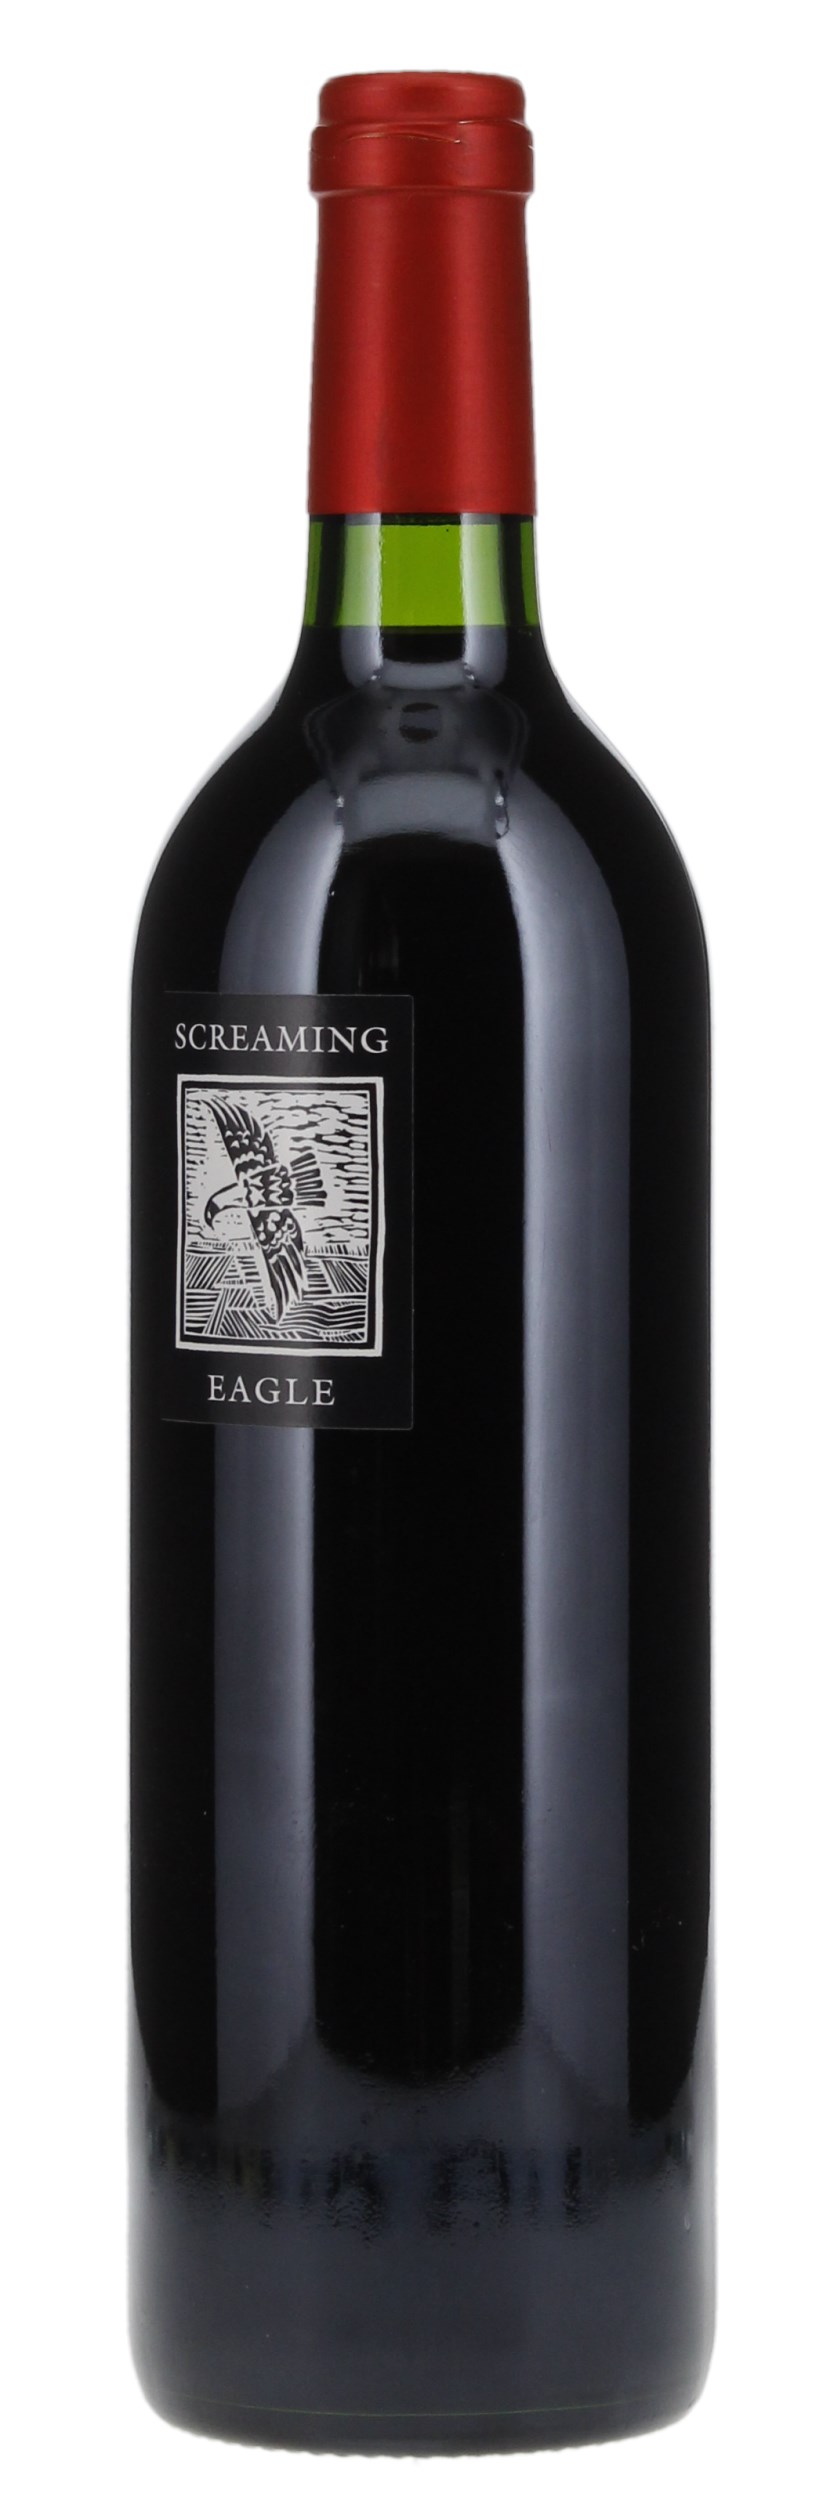 2003 Screaming Eagle Cabernet Sauvignon, 750ml